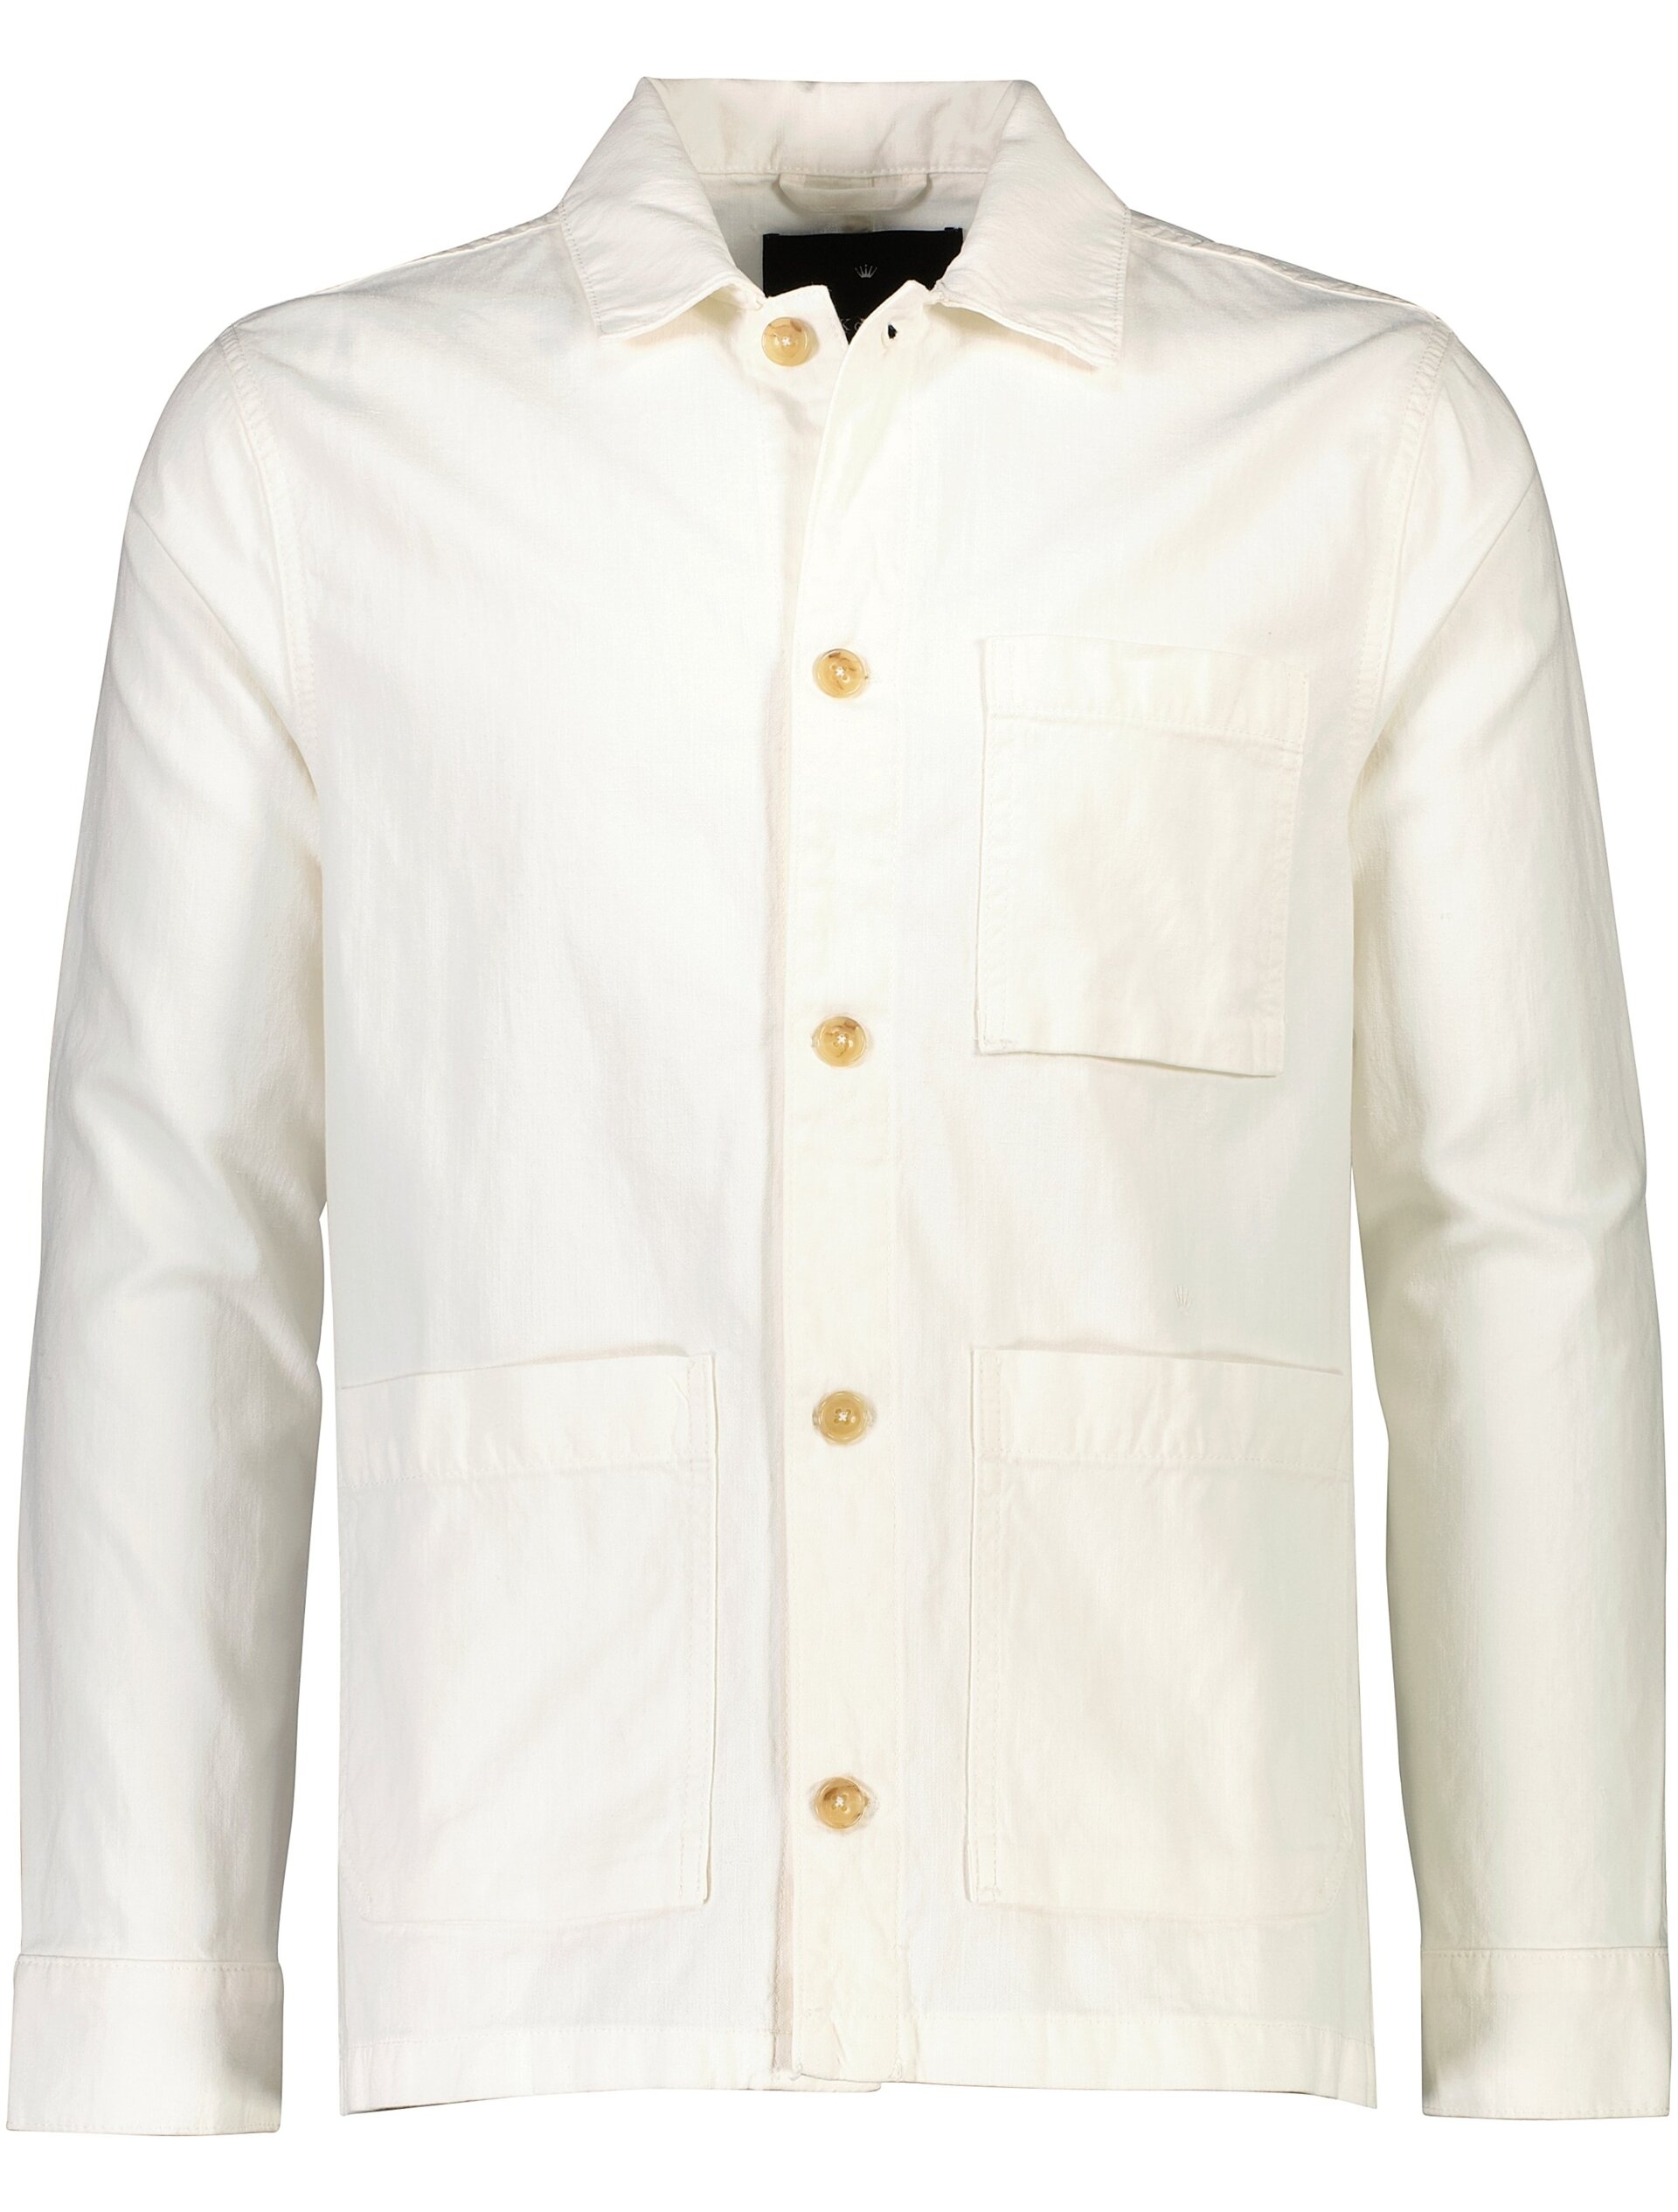 Junk de Luxe Overshirt white / off white